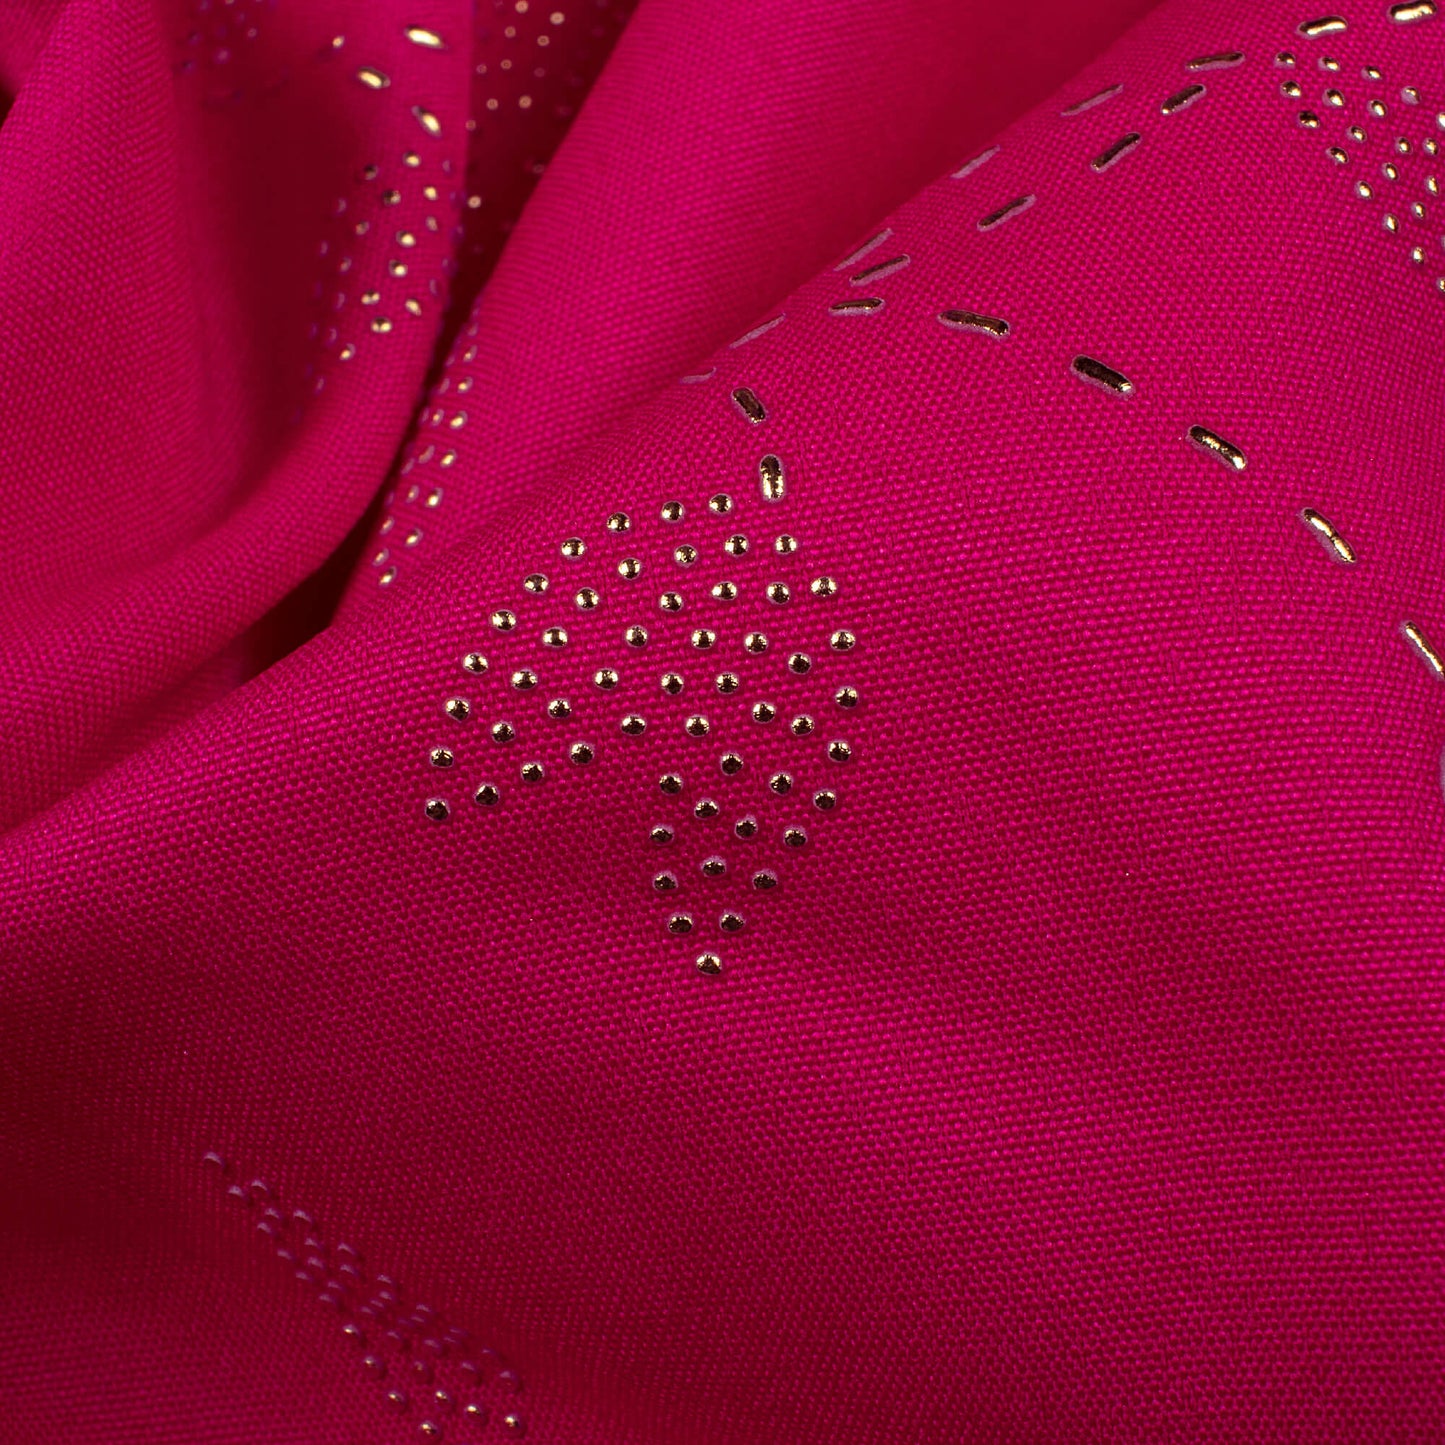 Cerise Pink Floral Golden Dew Drops Butter Crepe Fabric